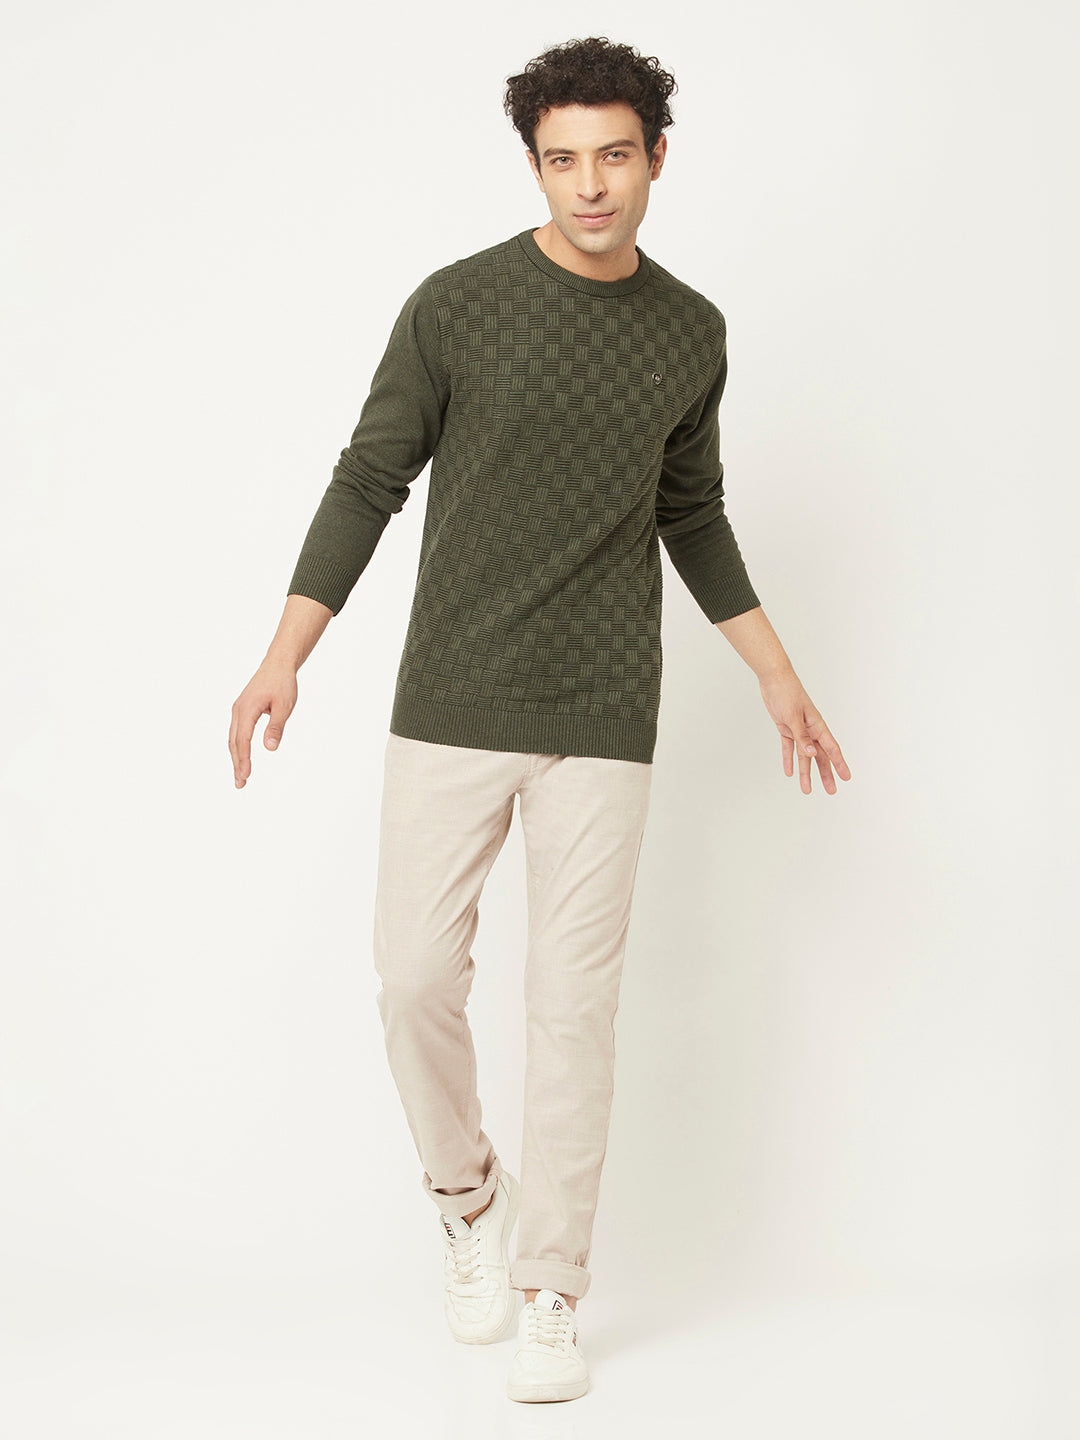 Army Green Sweater in Self Design Pattern-Men Sweaters-Crimsoune Club